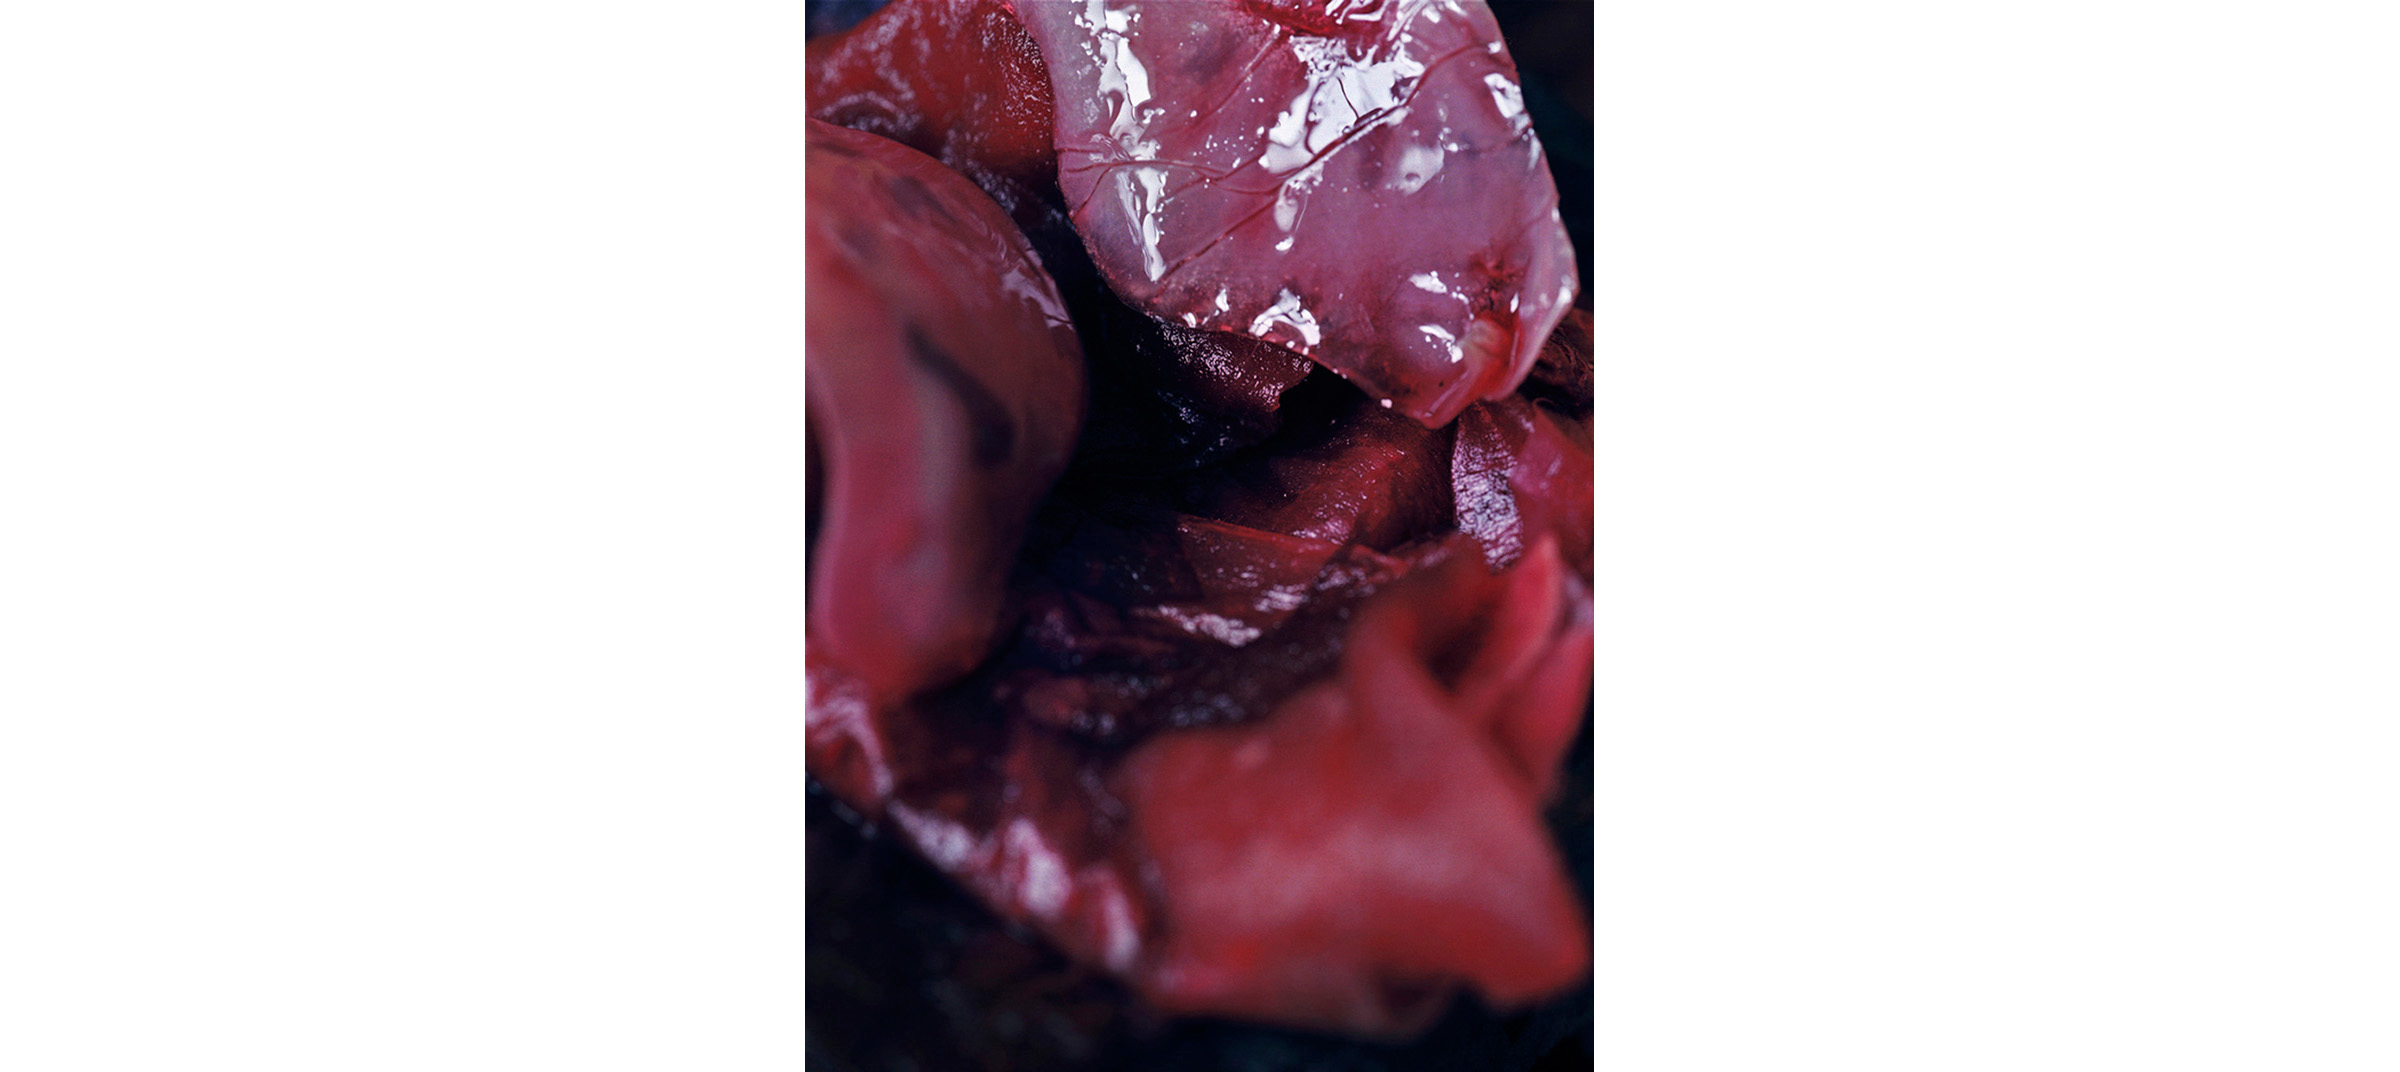   Red Fluids  Untitled N°2, 2005/2008 Tirage gélatino argentique 144 x 104 cm | Gelatin silver print 56,69 x 40,94 inches  3/5 